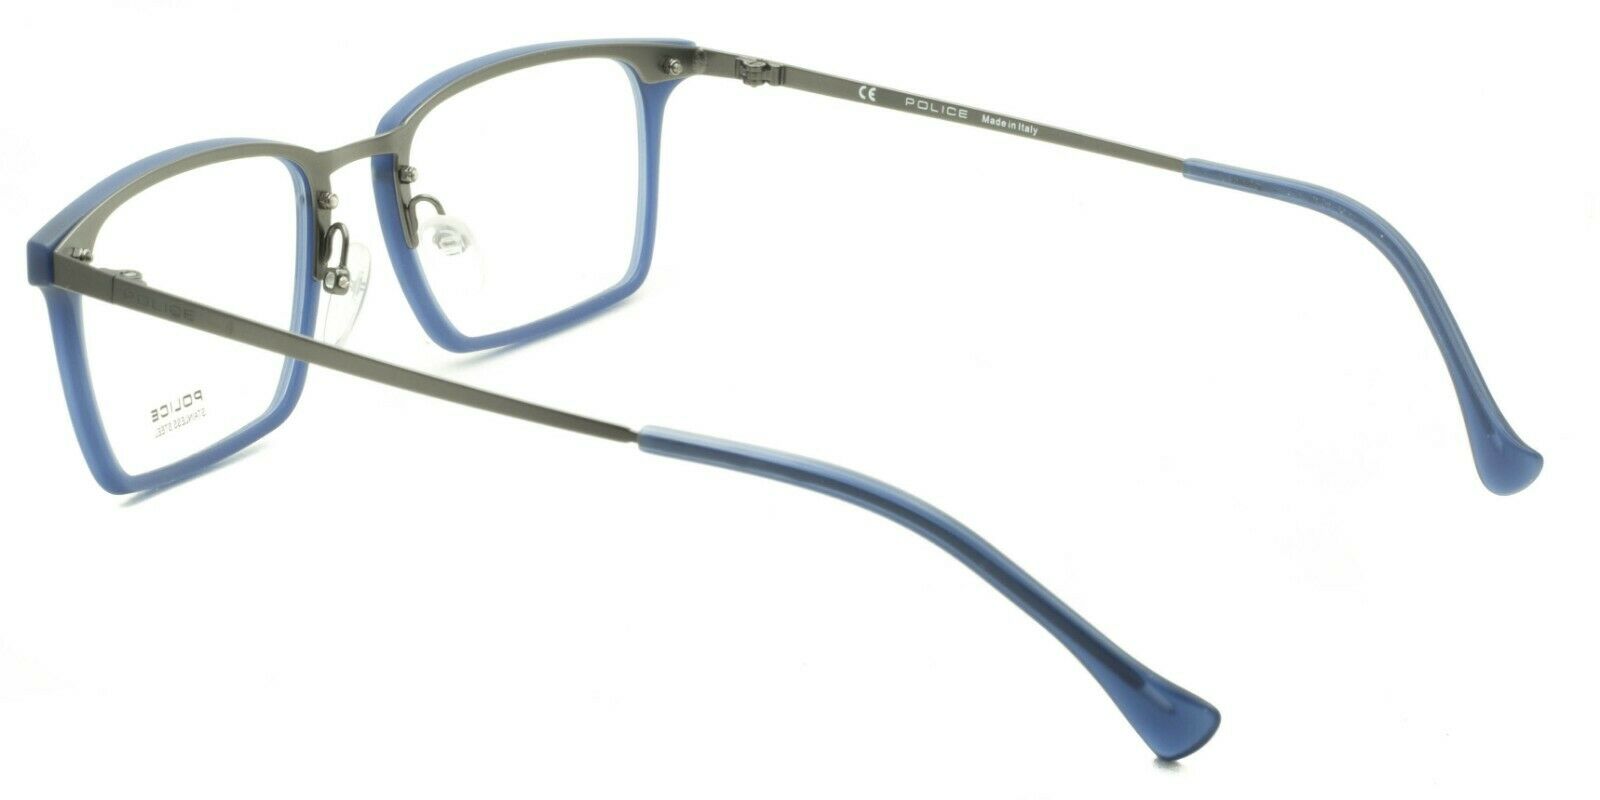 POLICE METTLE 3 VPL 248 COL. 627B 53mm Eyewear FRAMES Glasses RX Optical - New